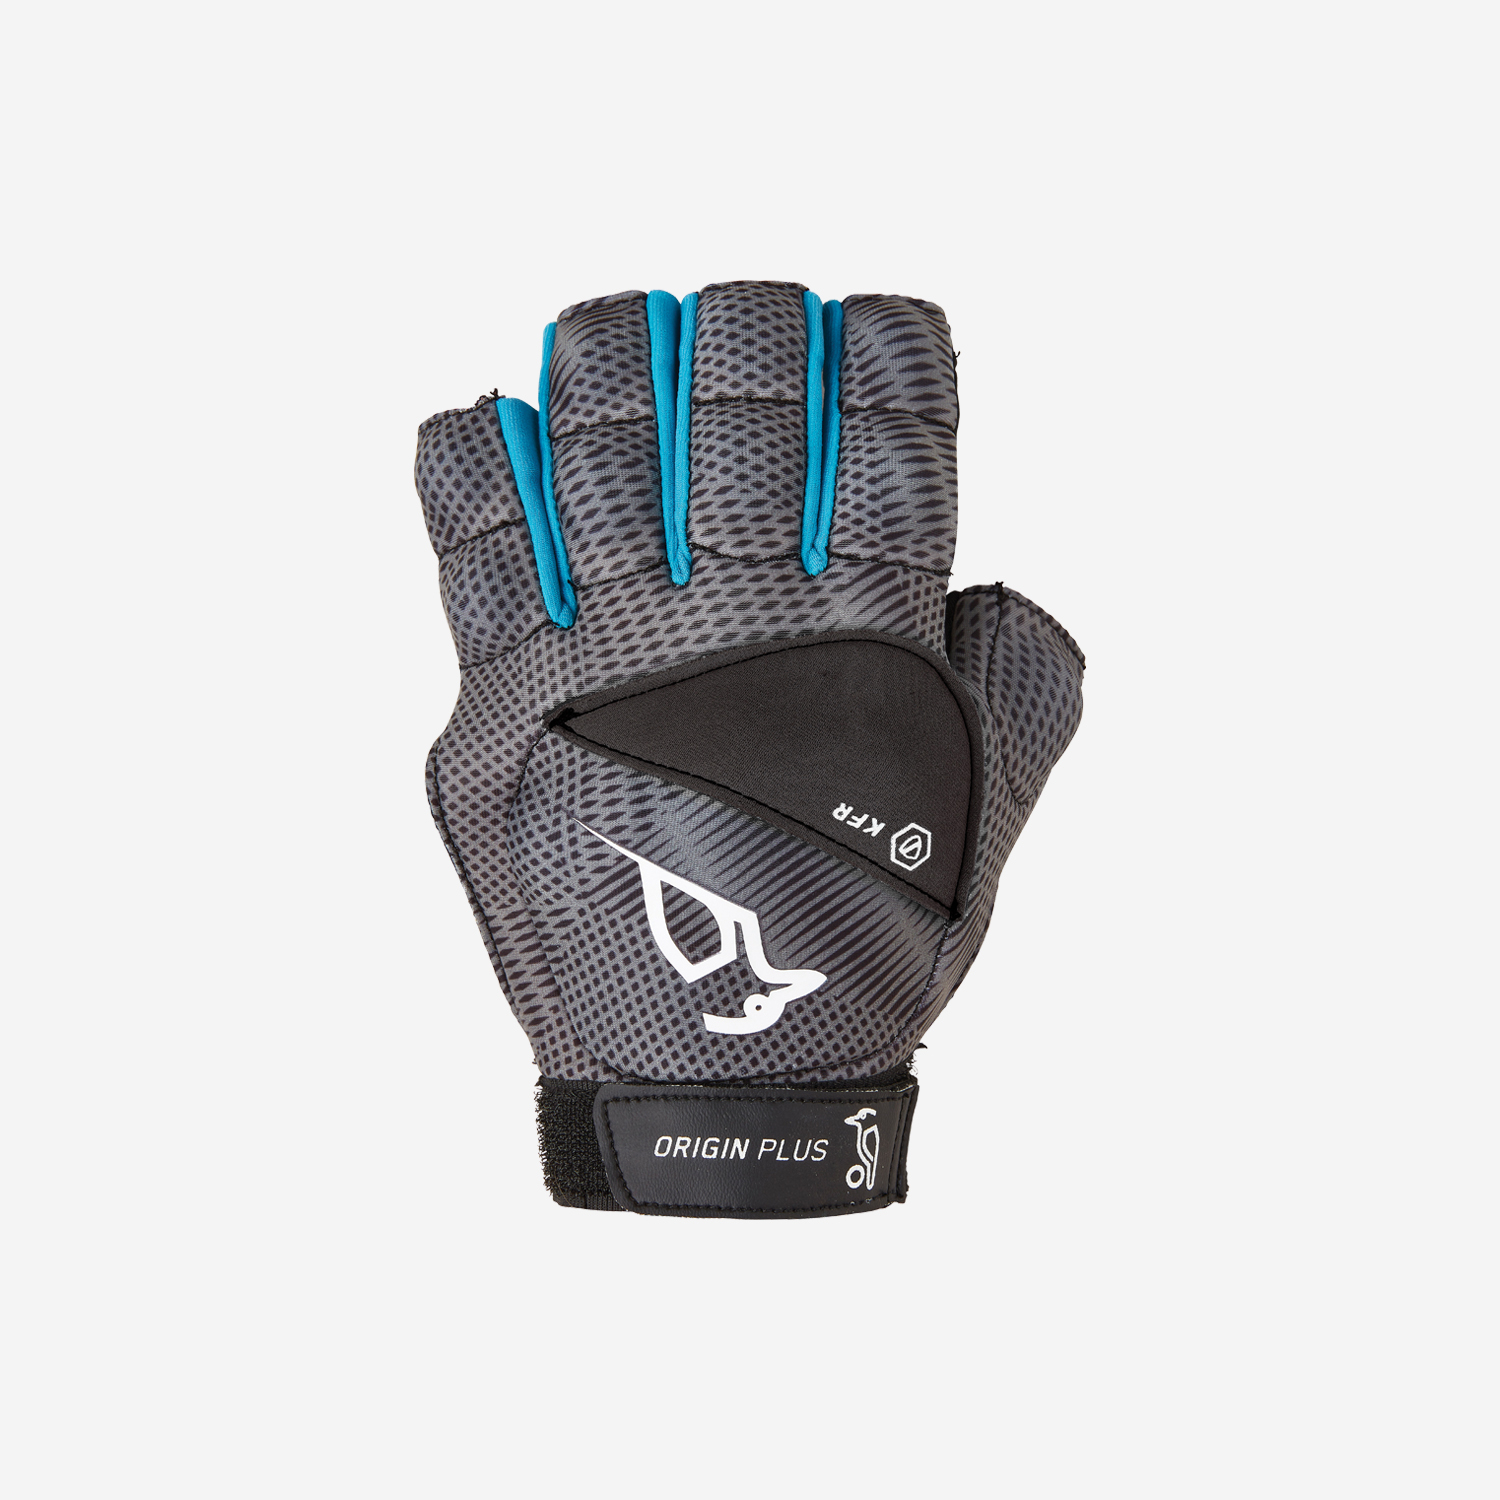 Origin Plus Hockey Glove